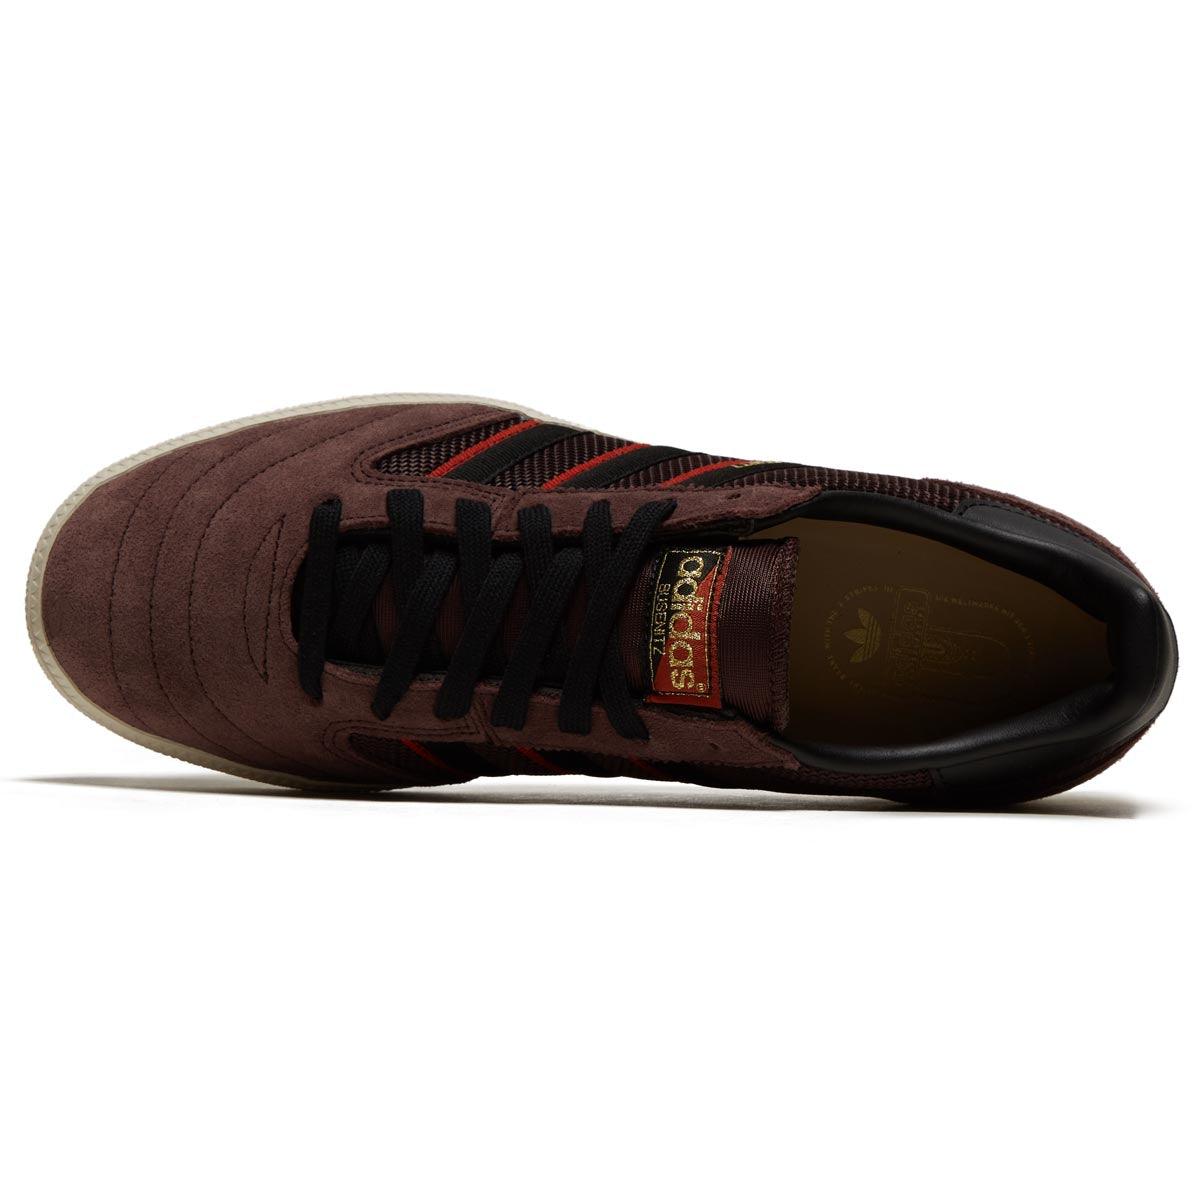 Adidas Busenitz Vintage Shoes - Shadow Brown/Black/White image 3